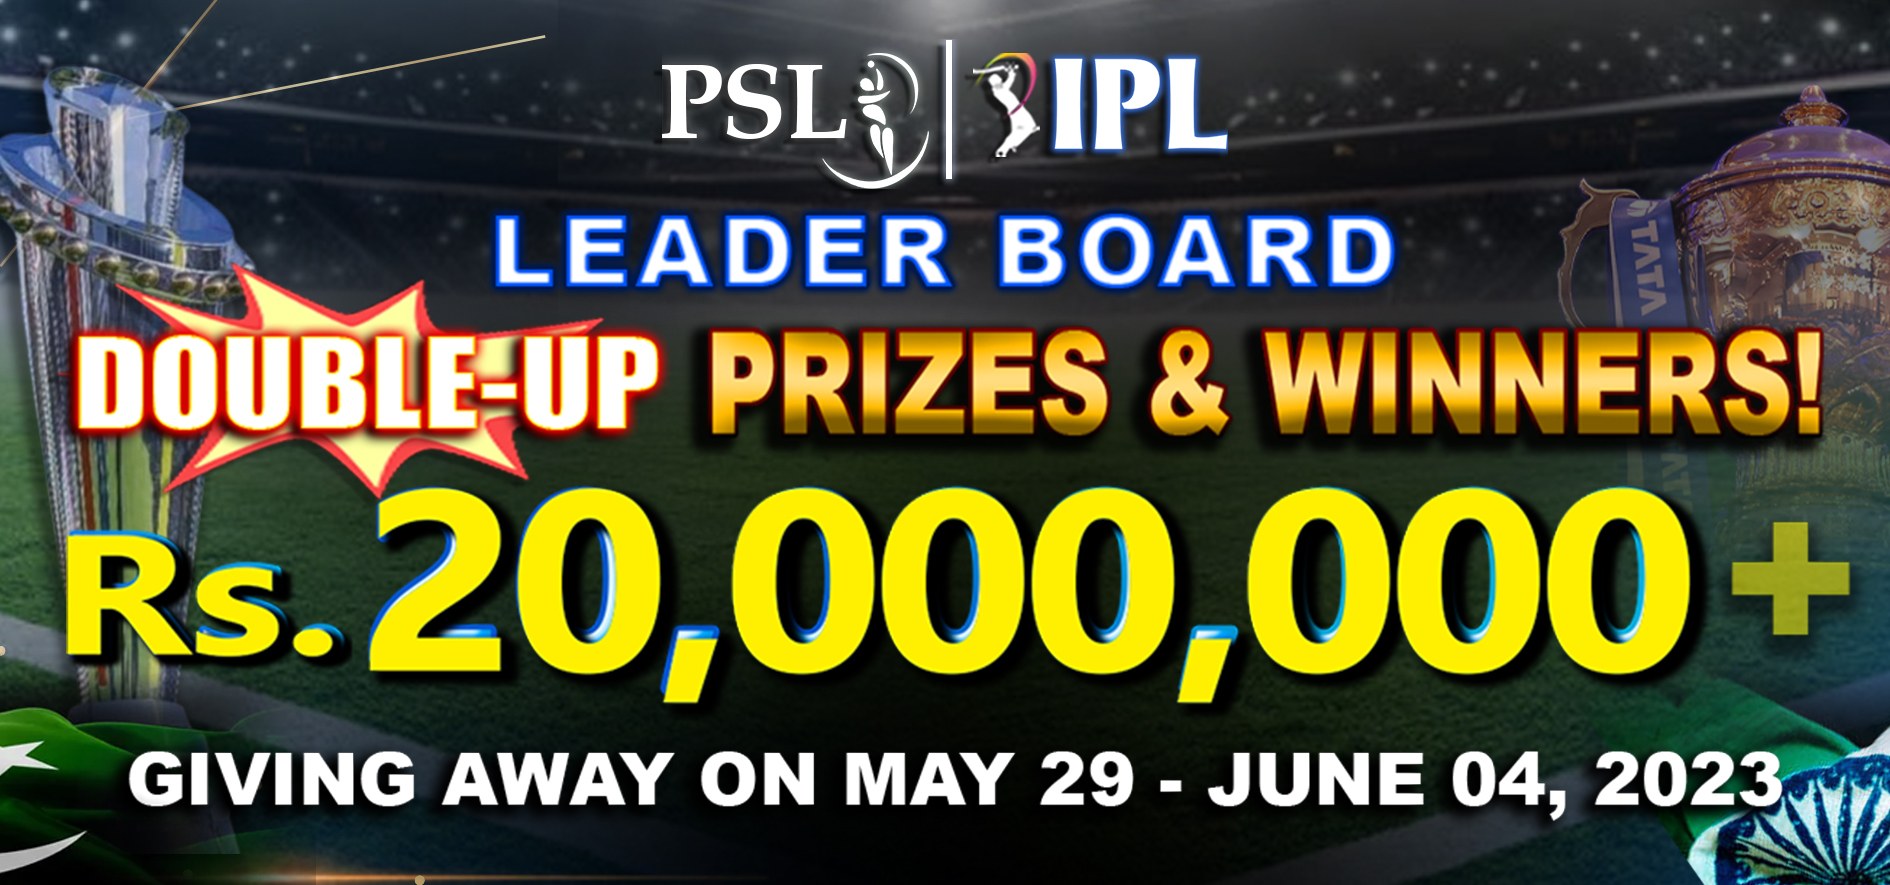 new update PSL AND IPL PROMO NEW BG FINAL